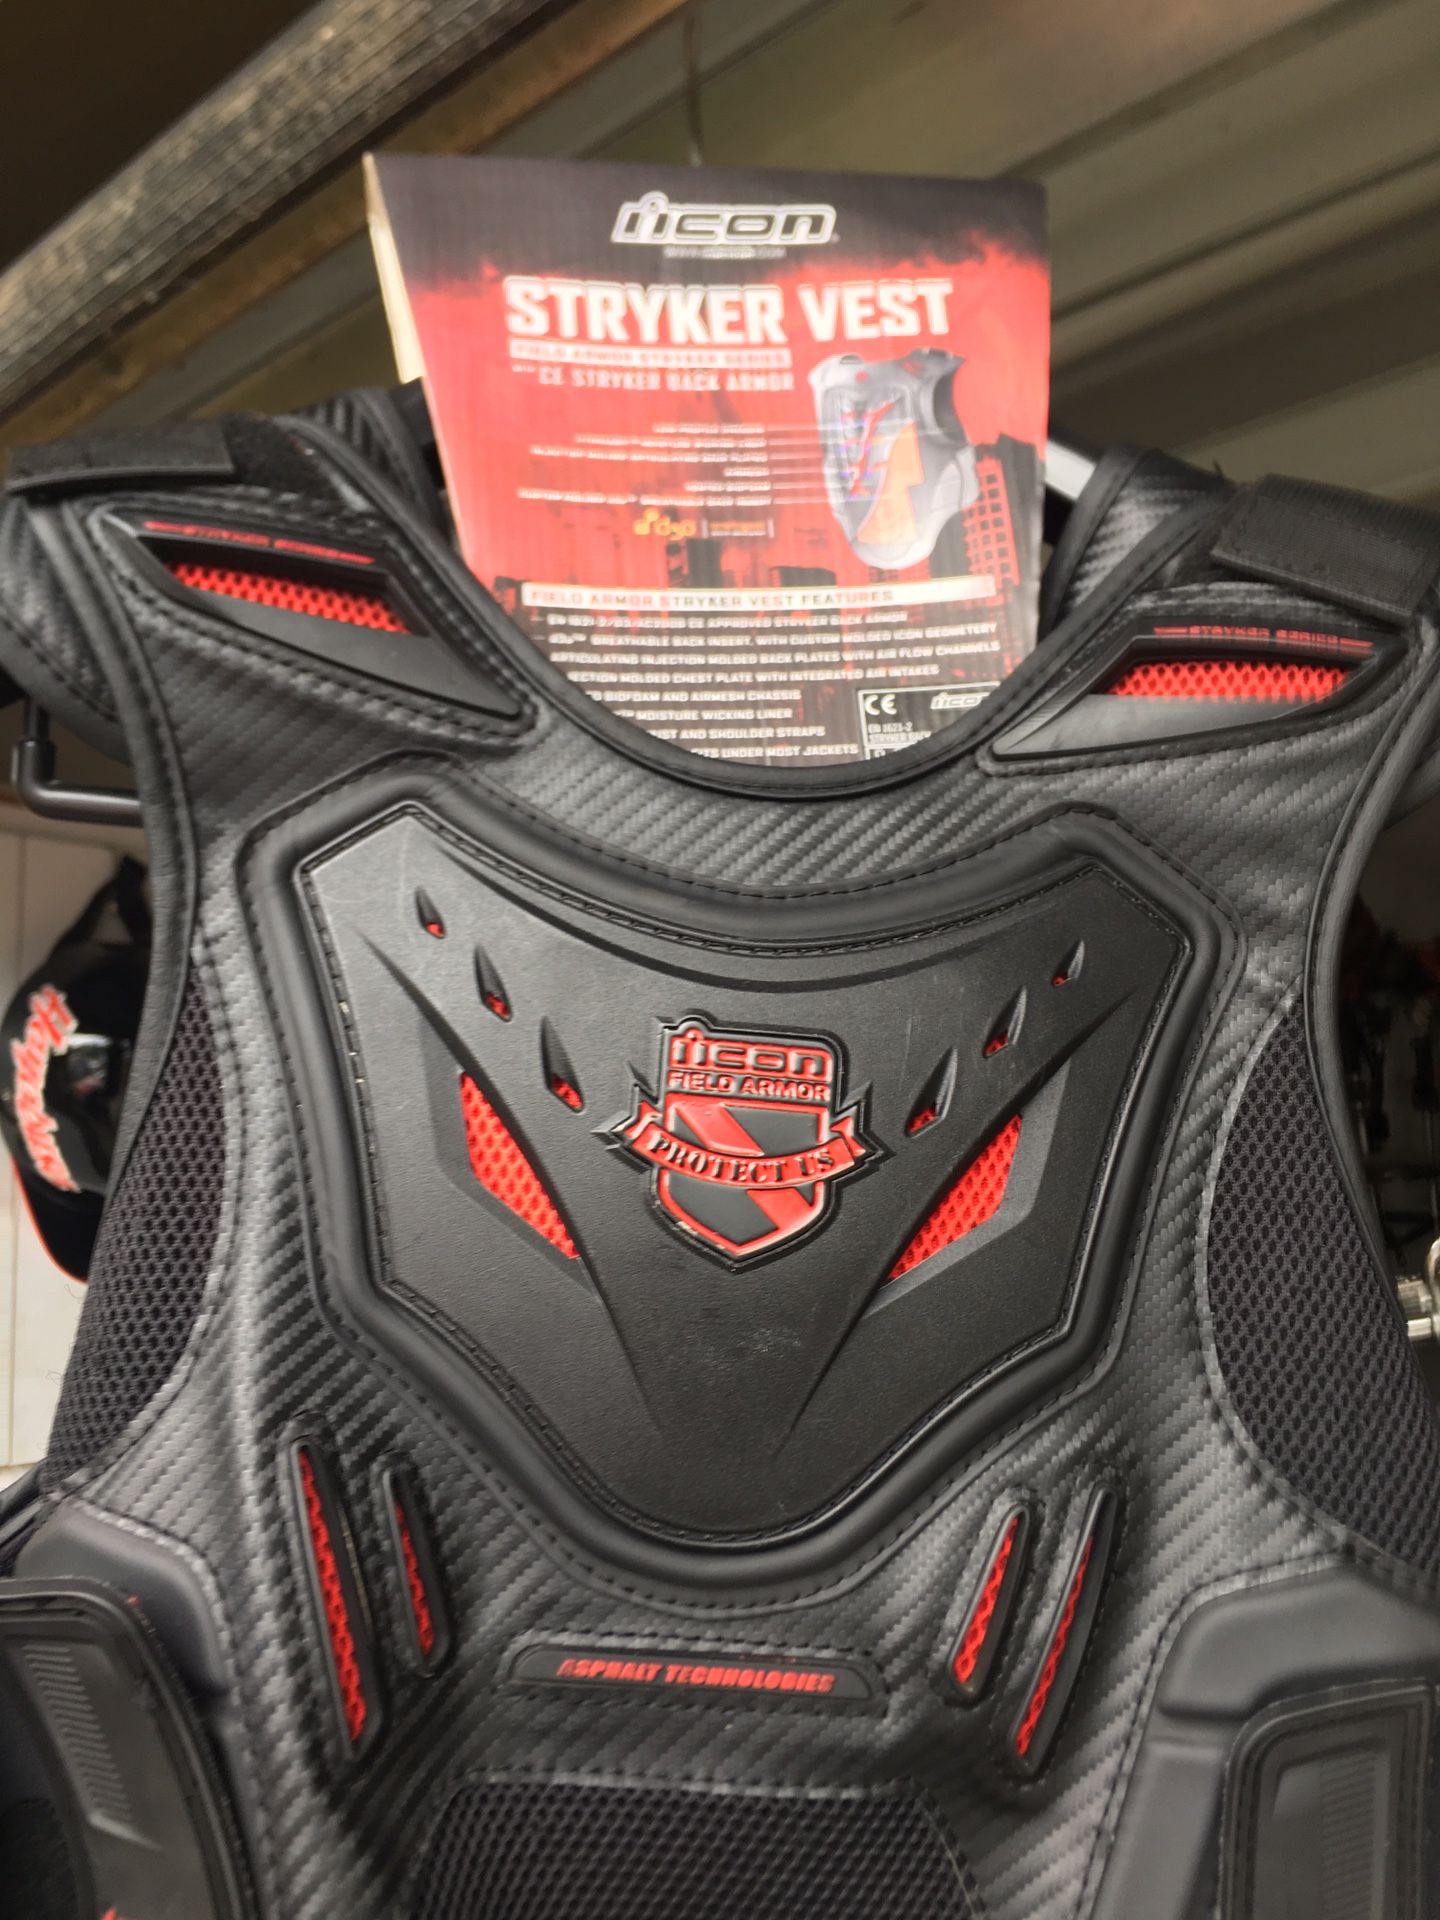 Brand new armor vest size LXL